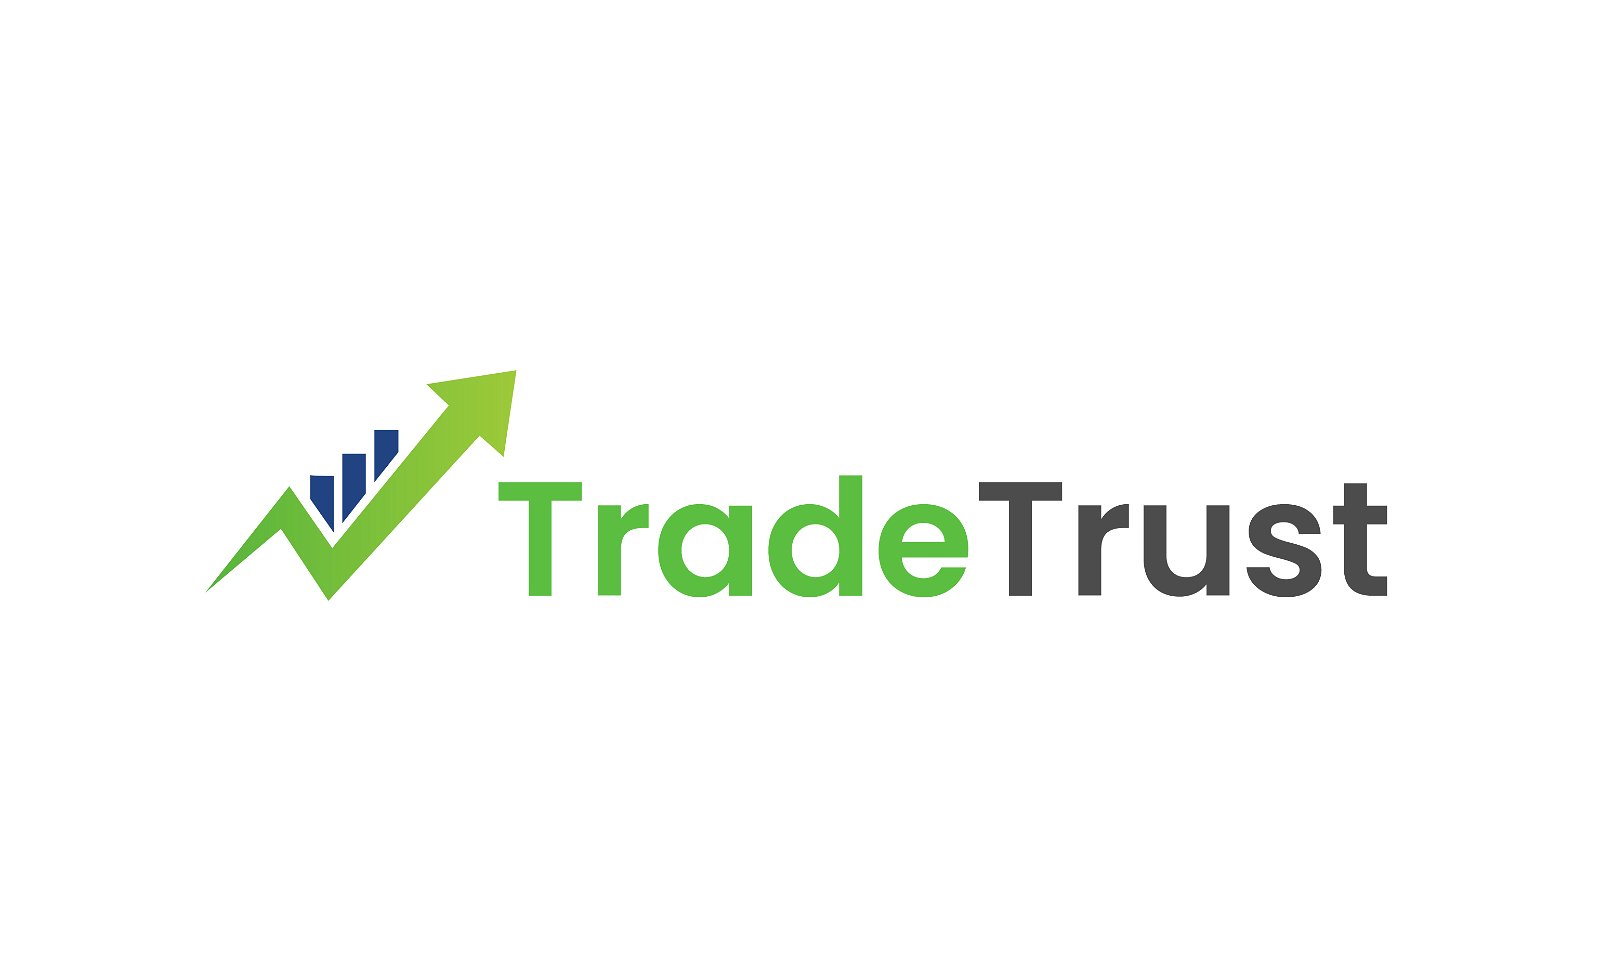 TradesTrust.com - Creative brandable domain for sale